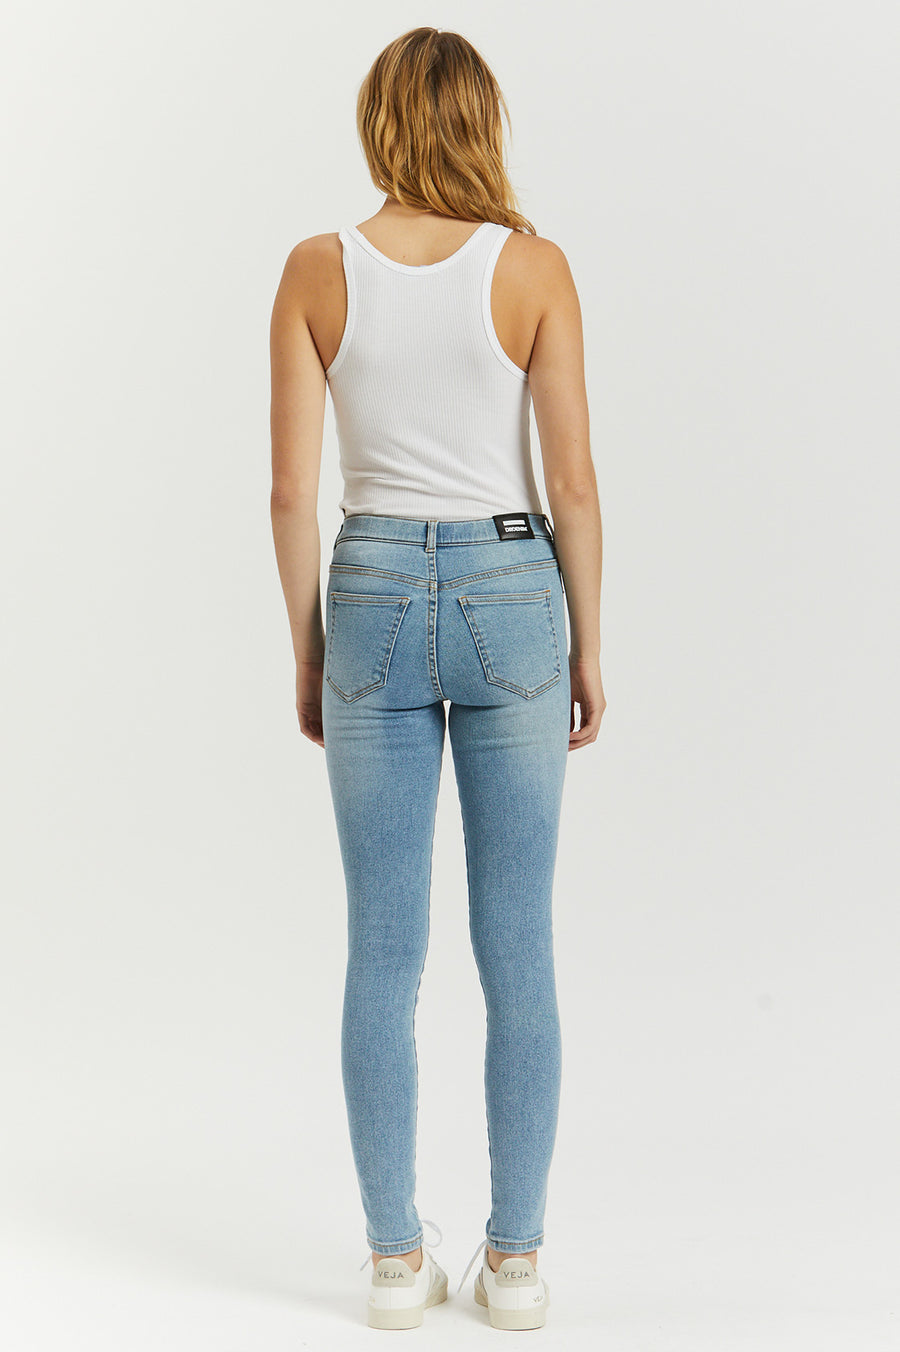 Lexy Jeans - Breeze Light Stone - Dr Denim Jeans - Australia & NZ